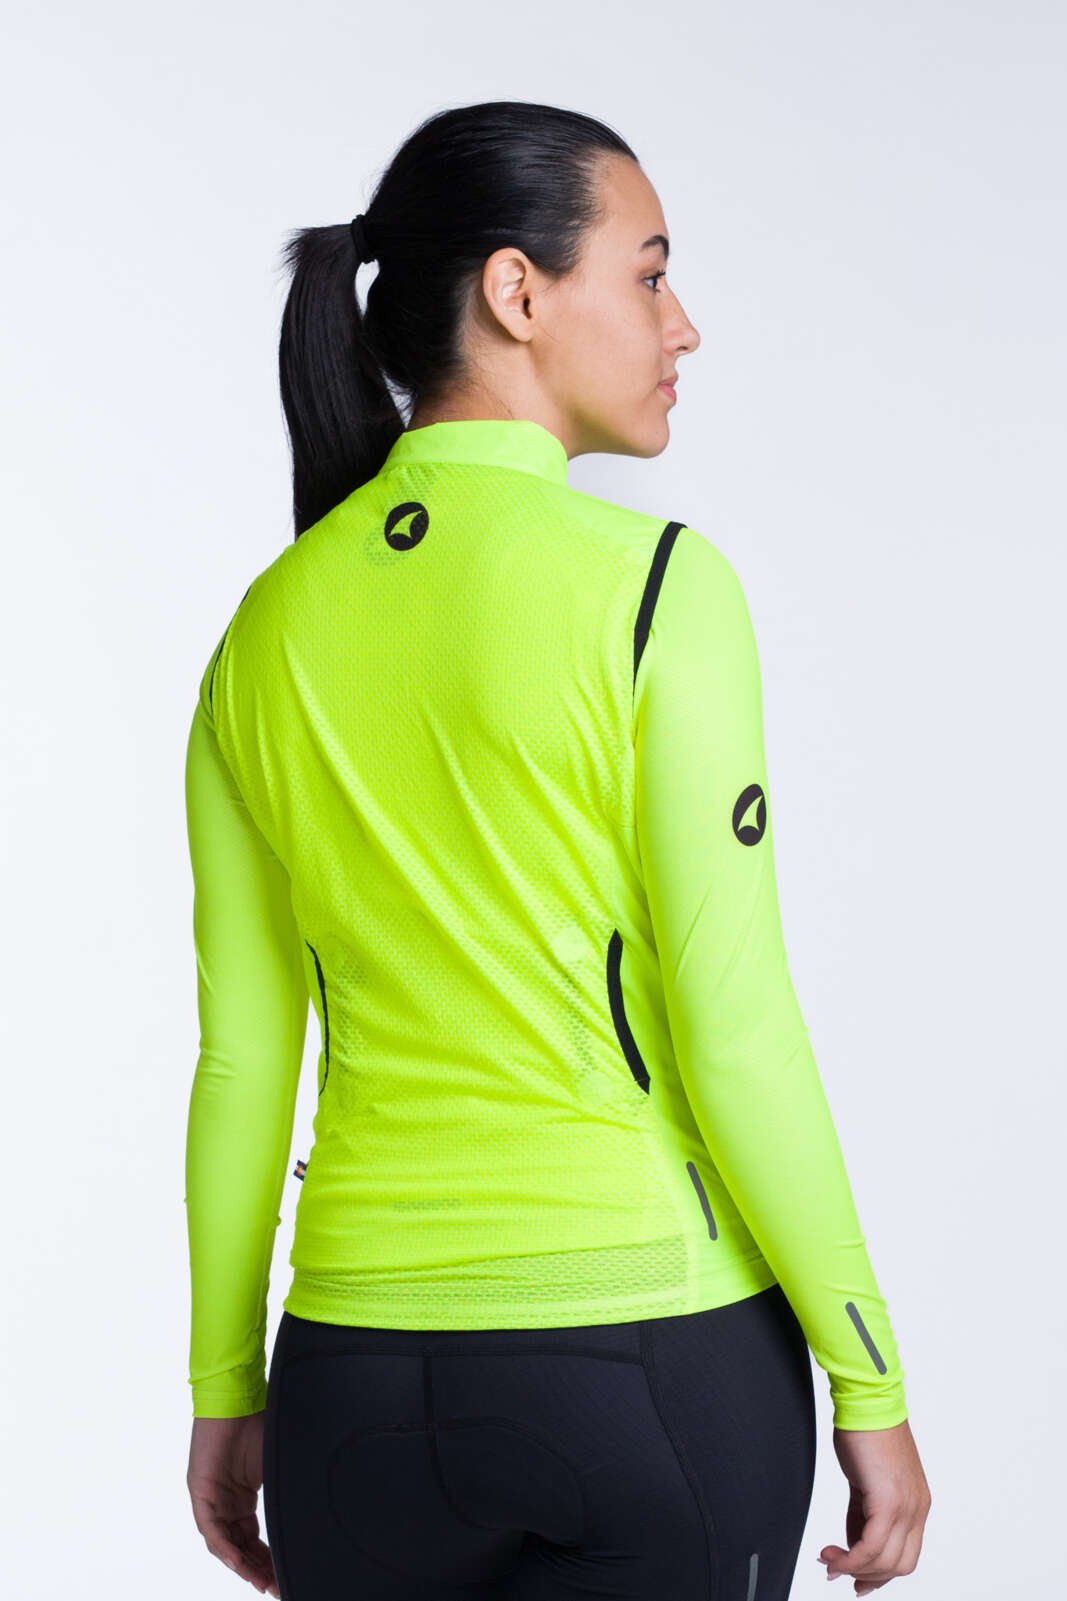 Women's High Viz-Yellow Packable Cycling Wind Vest - Matching Jersey Combo